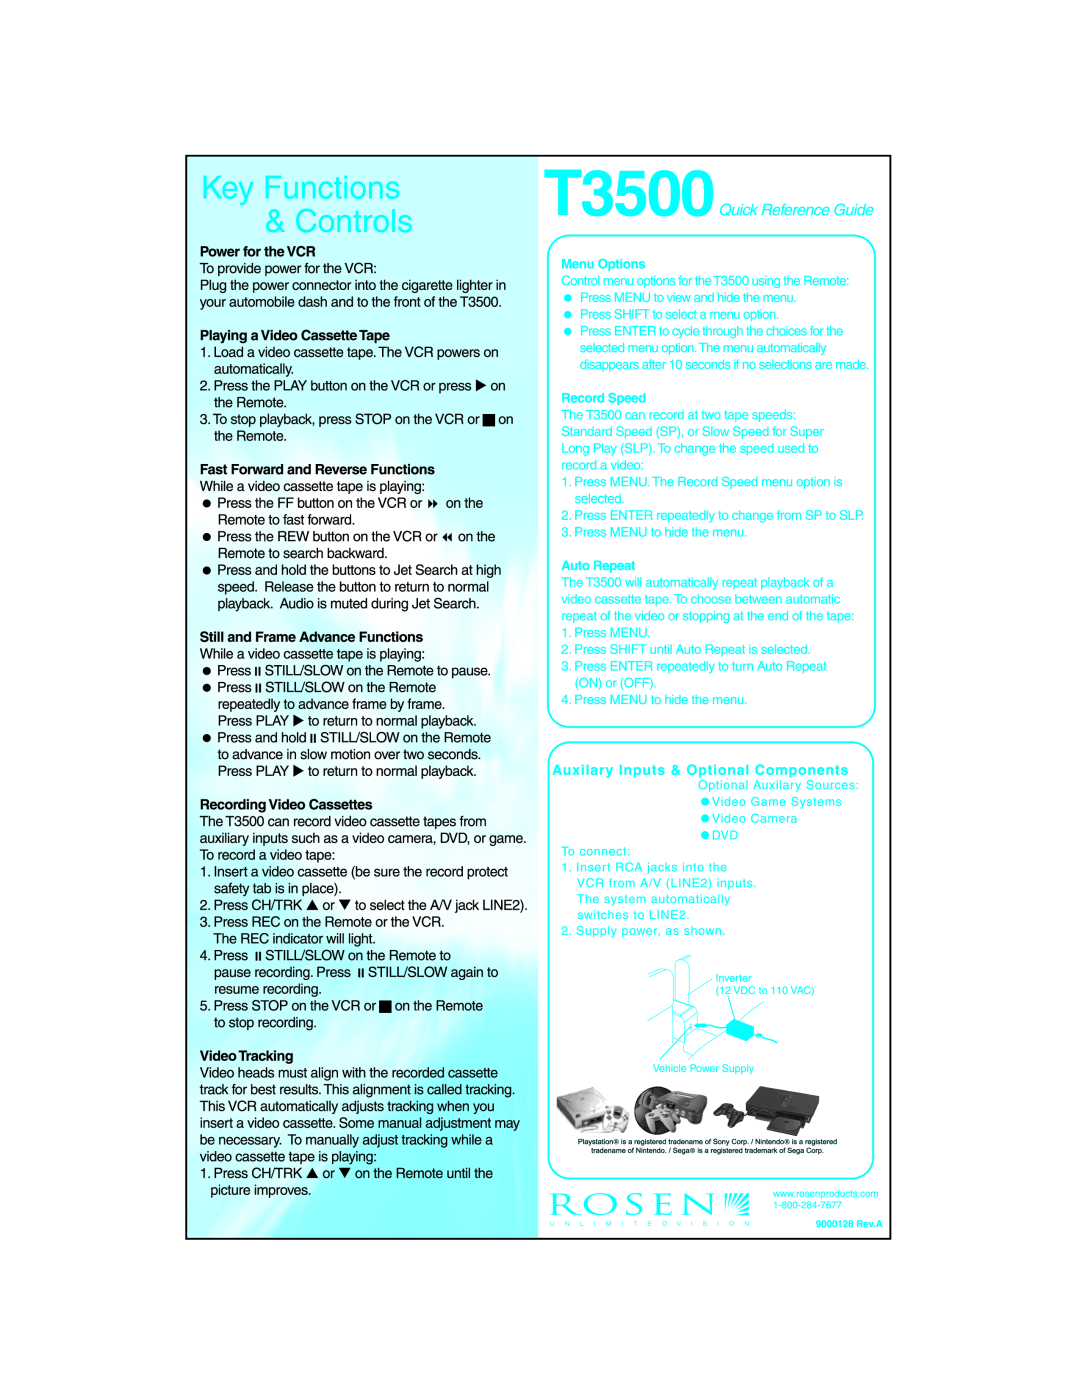 Rosen Entertainment Systems T3500 manual 